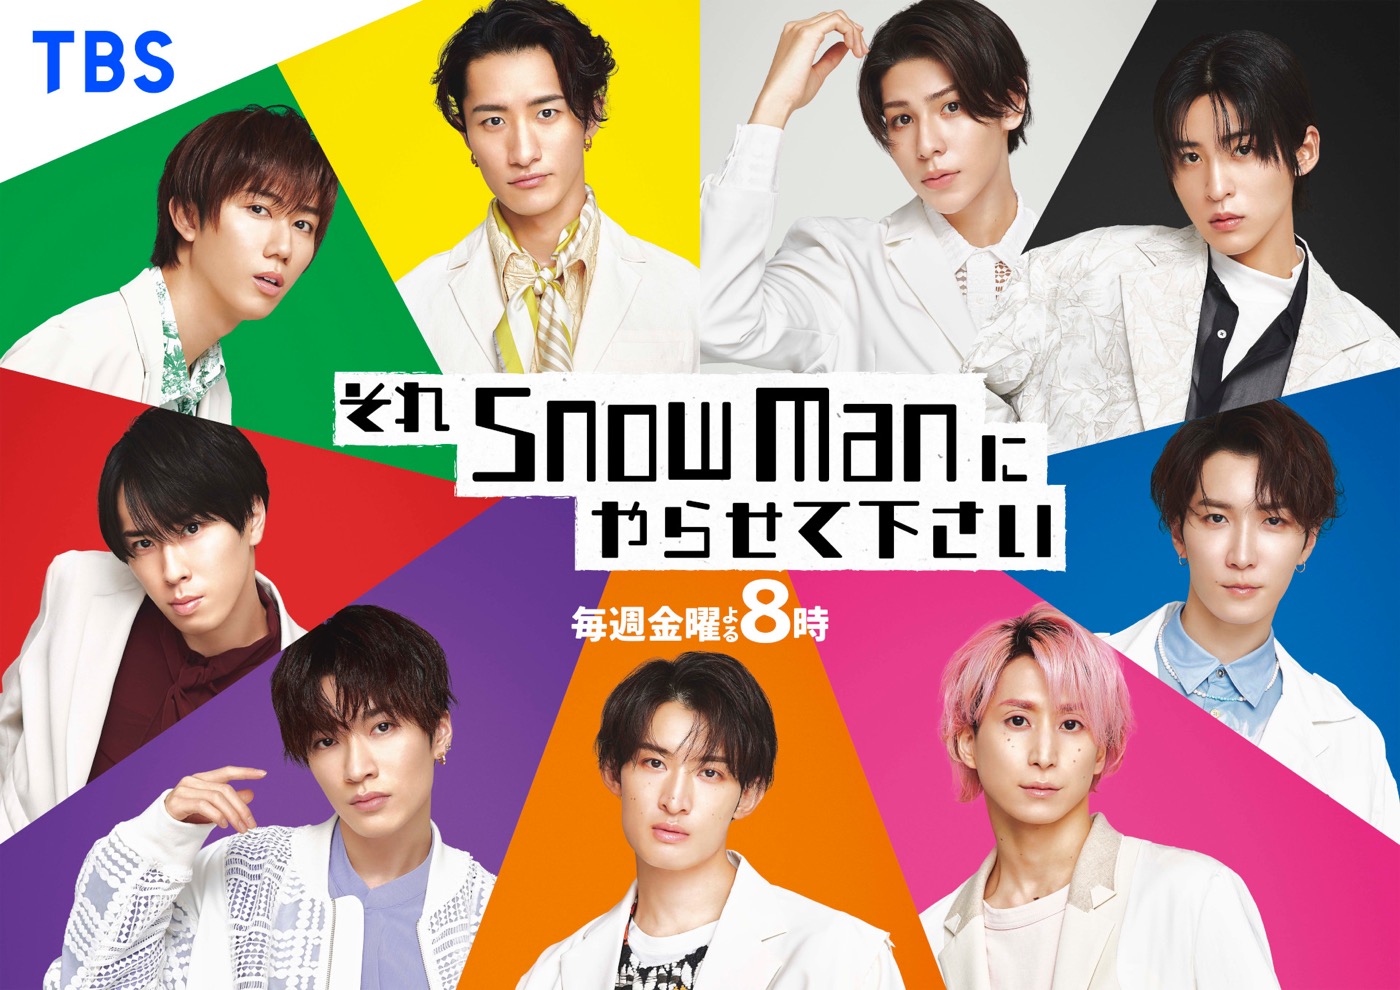 Snow Man 公式写真 混合 まとめ売り 114枚セット - アイドル